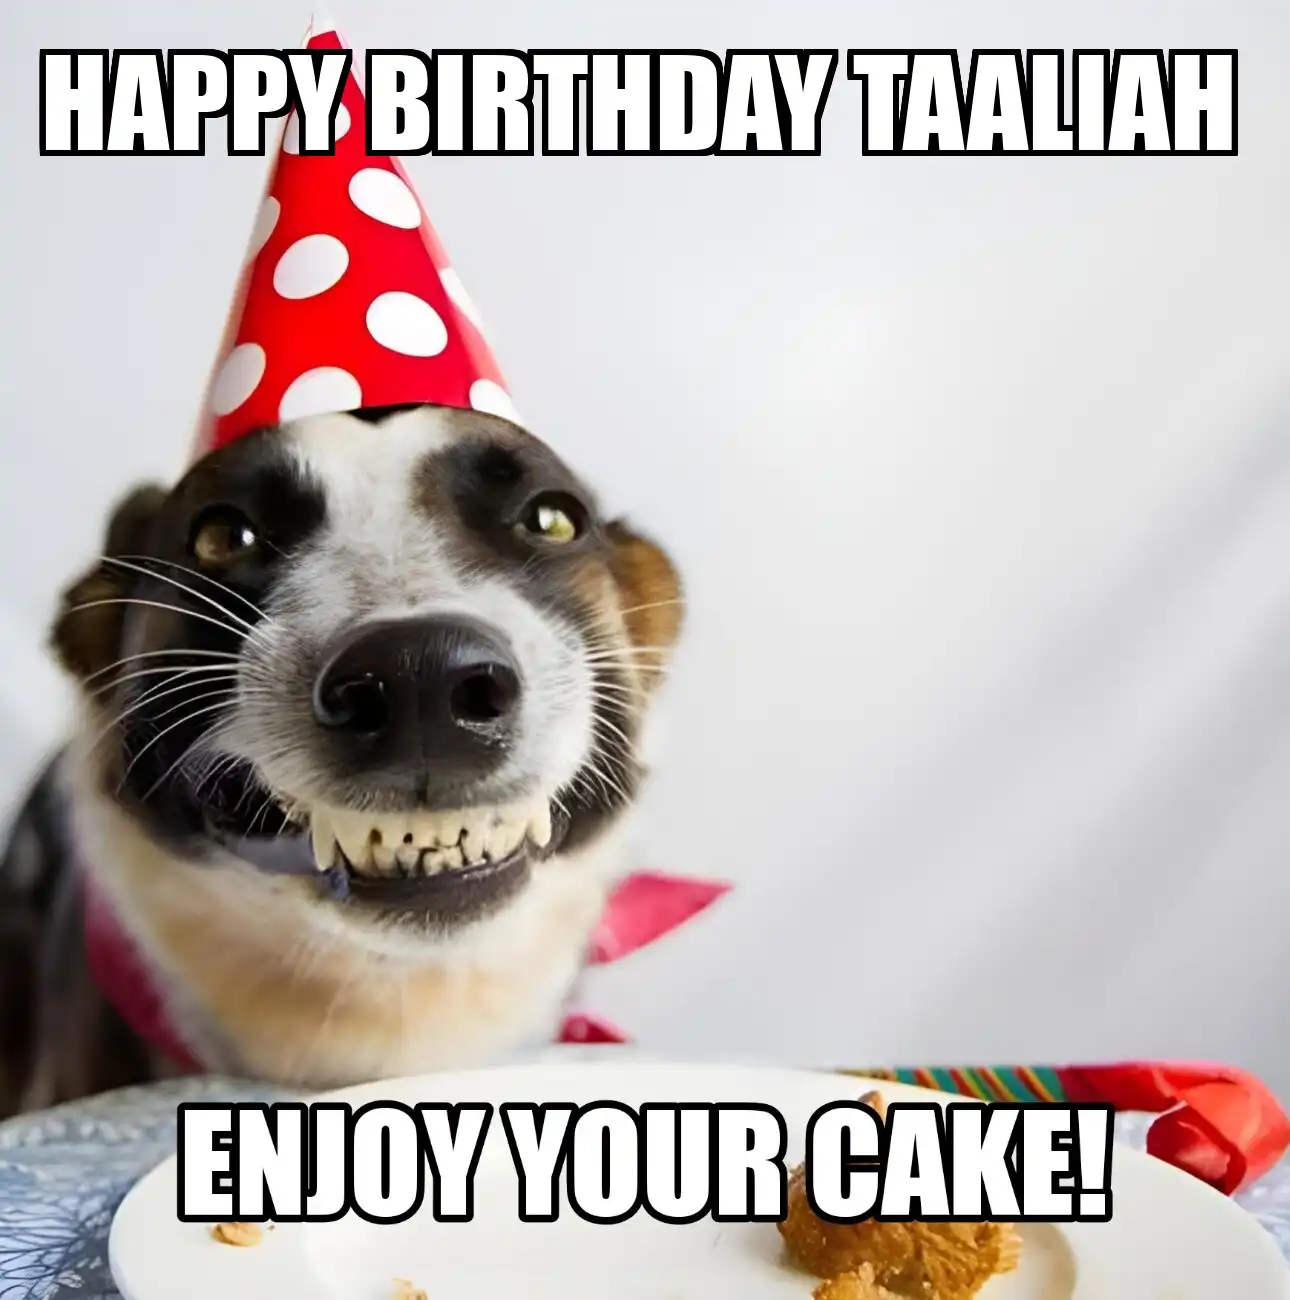 Happy Birthday Taaliah Enjoy Your Cake Dog Meme